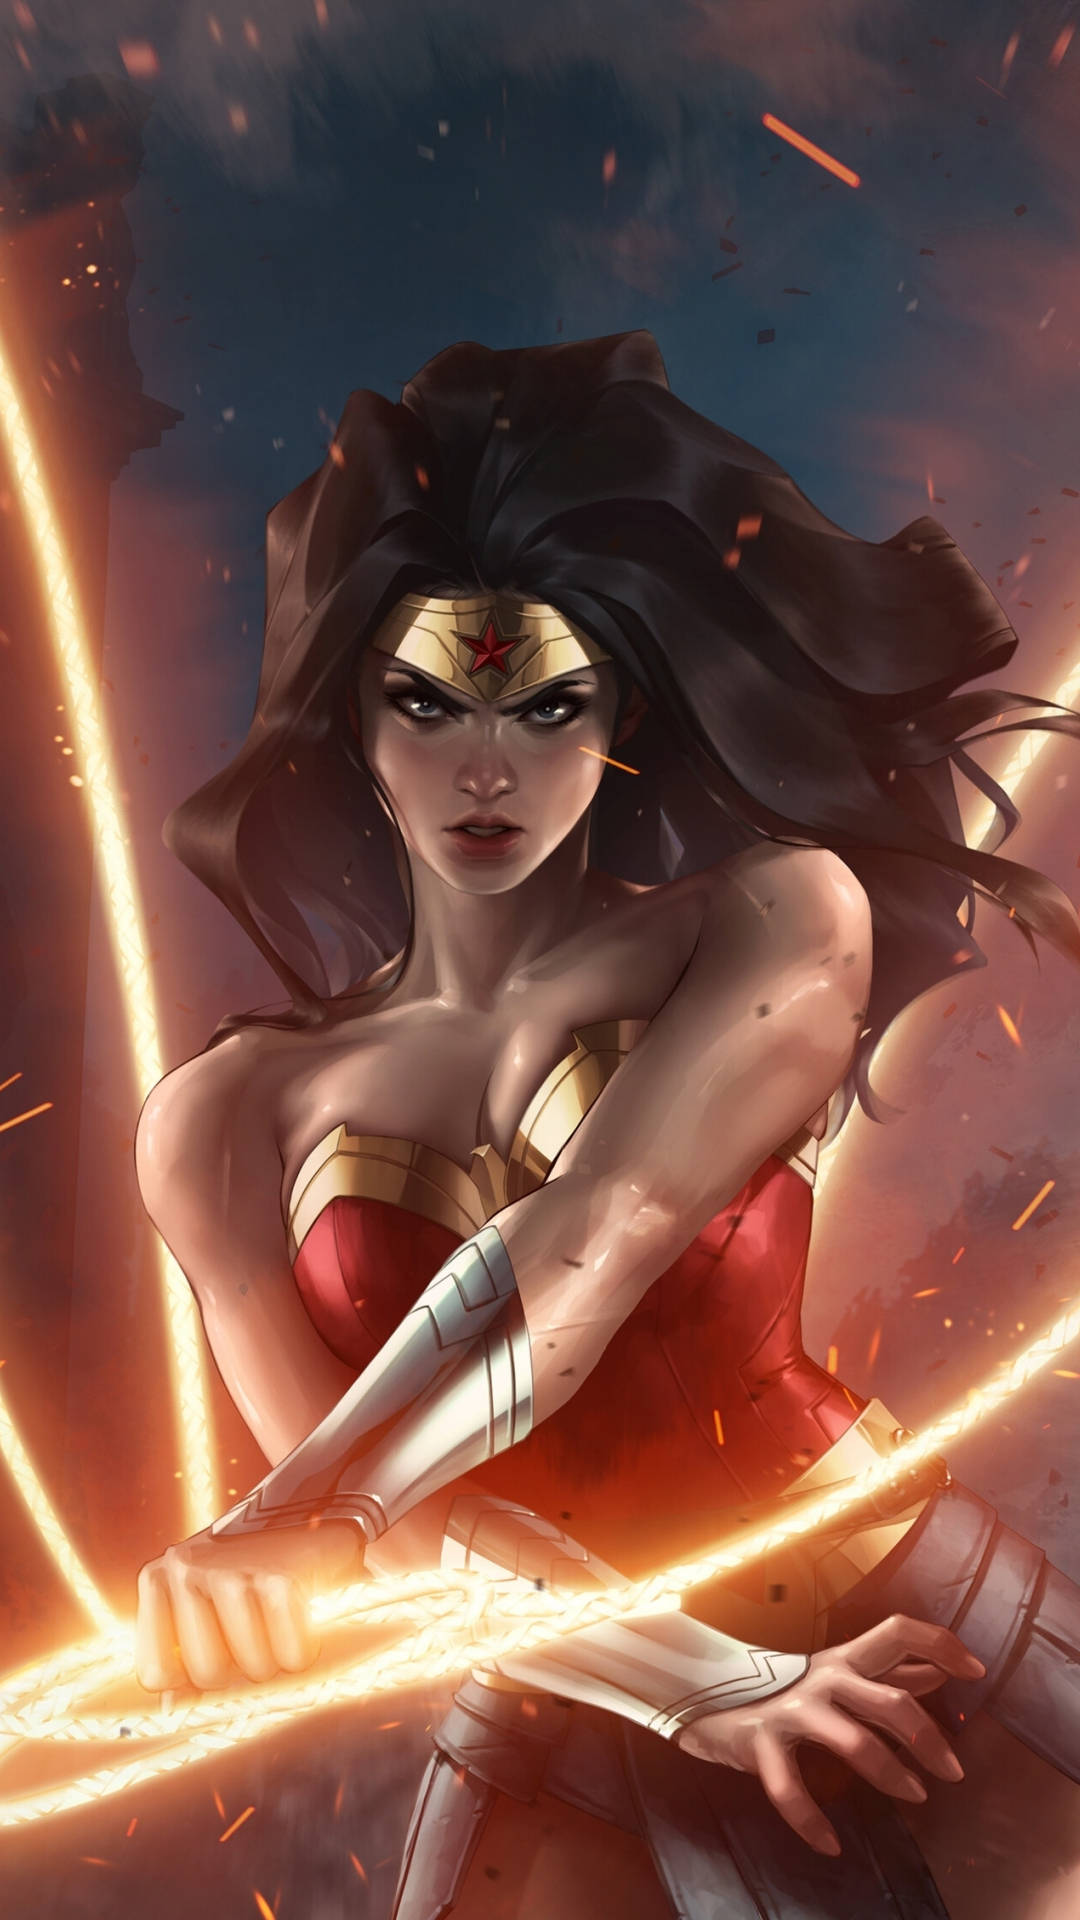 Fierce DC Superhero Wonder Woman Wallpaper